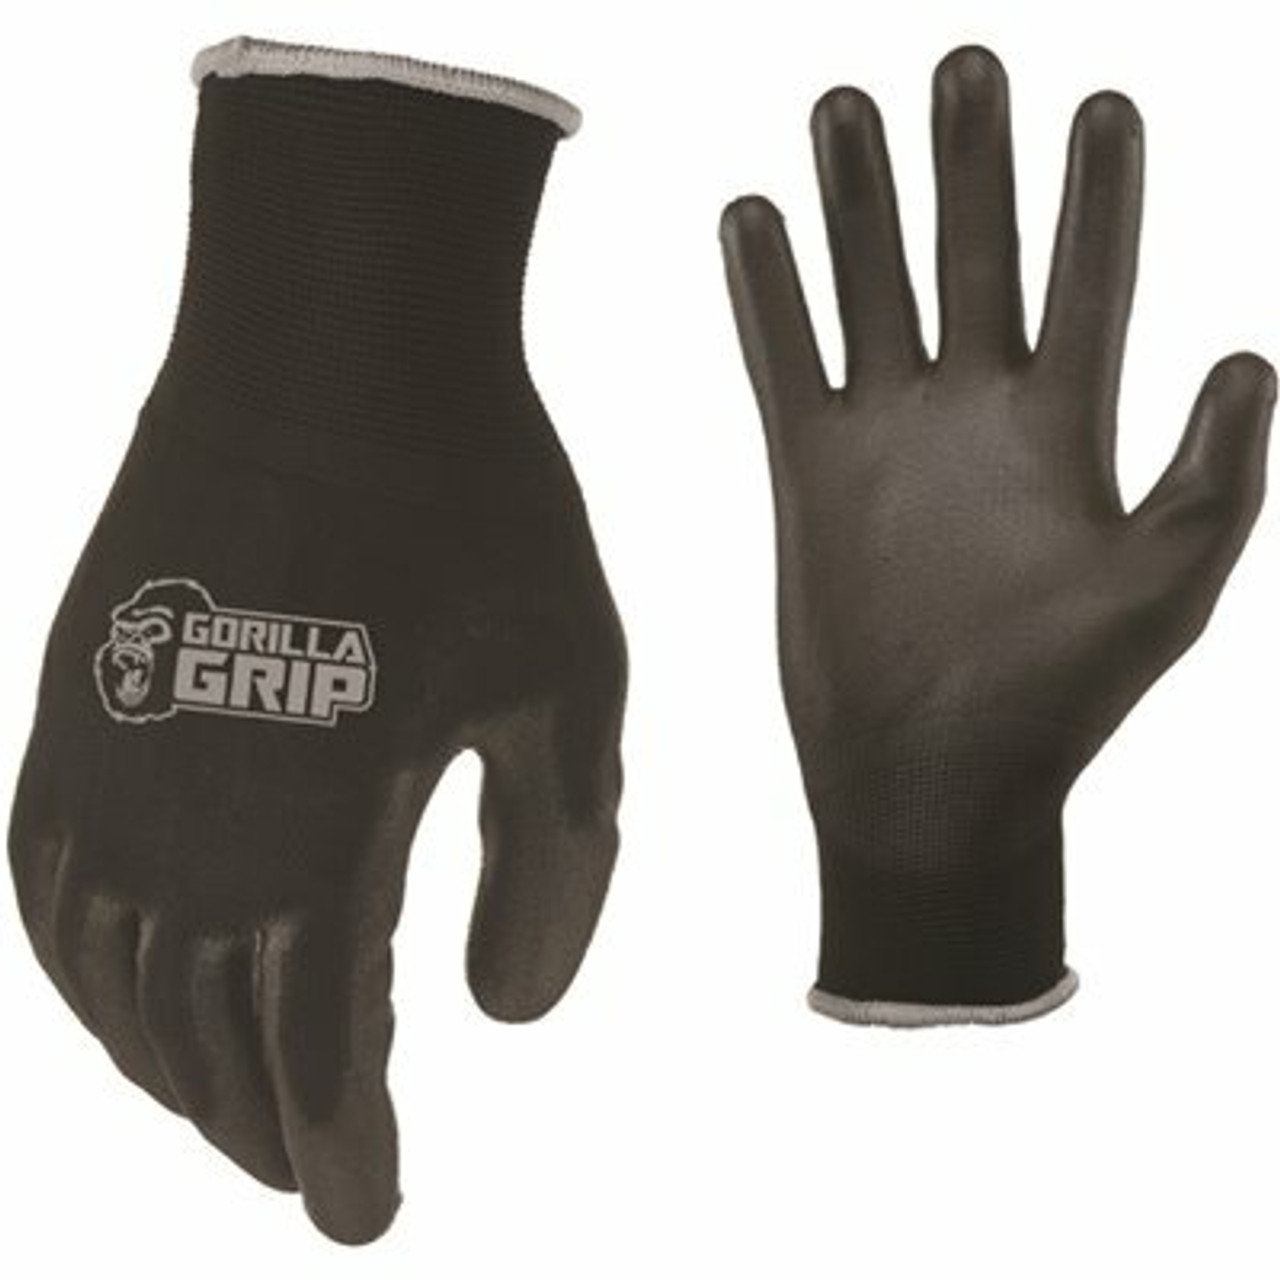 GORILLA GRIP X-Large Gloves - Pack of 30